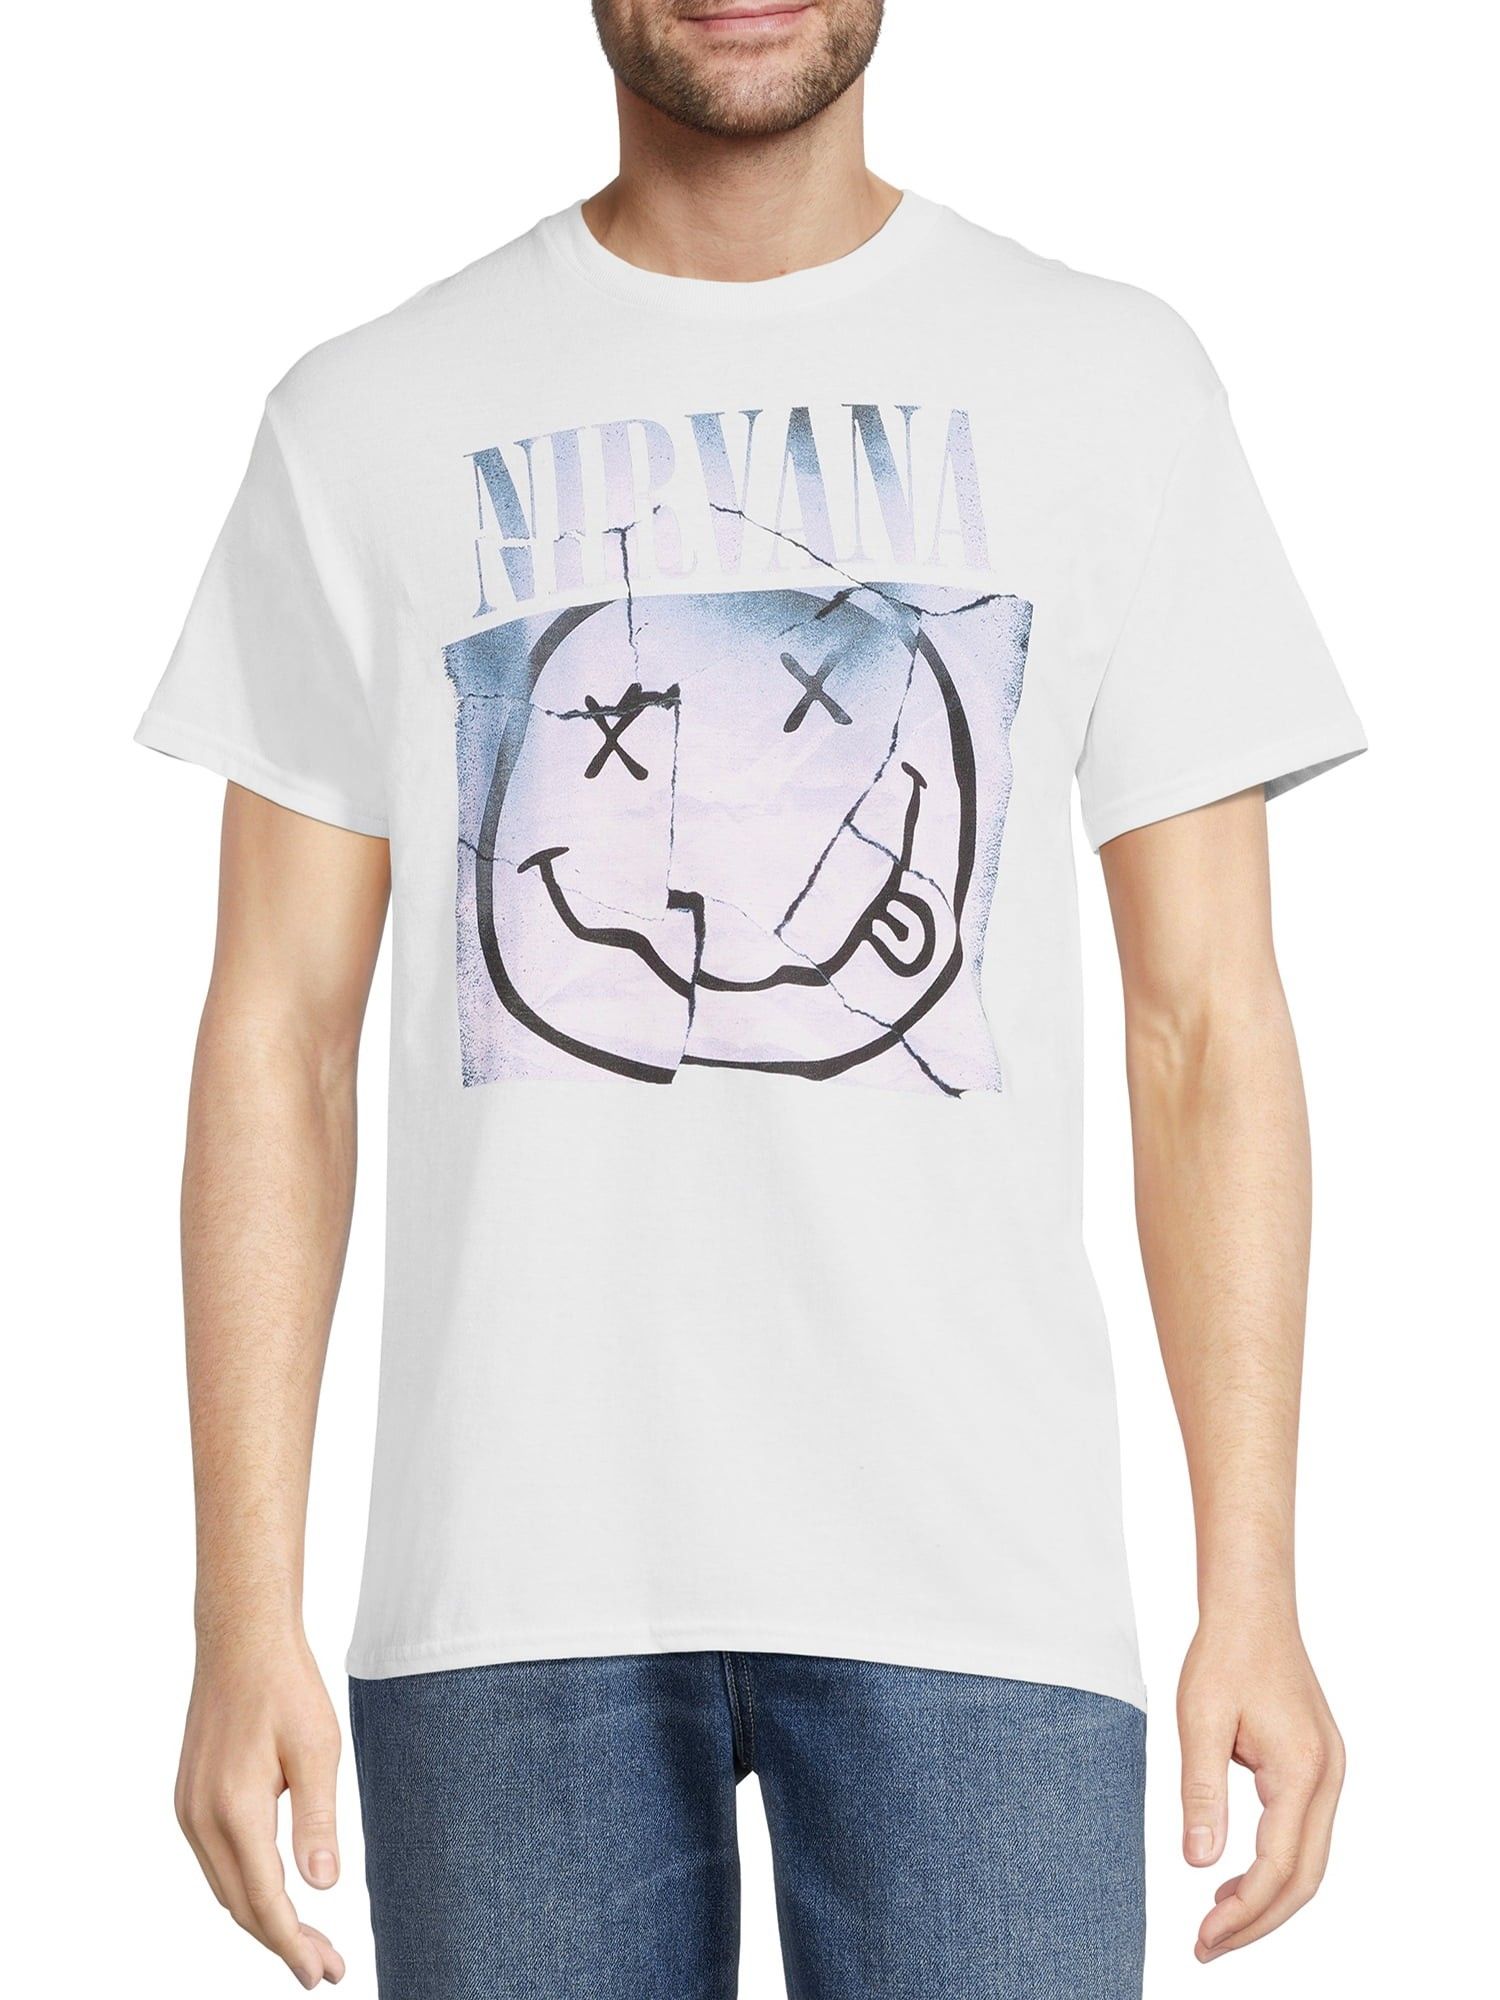 Nirvana Men's & Big Men's Smiley Face Graphic Band T-Shirt, Sizes S-3XL | Walmart (US)